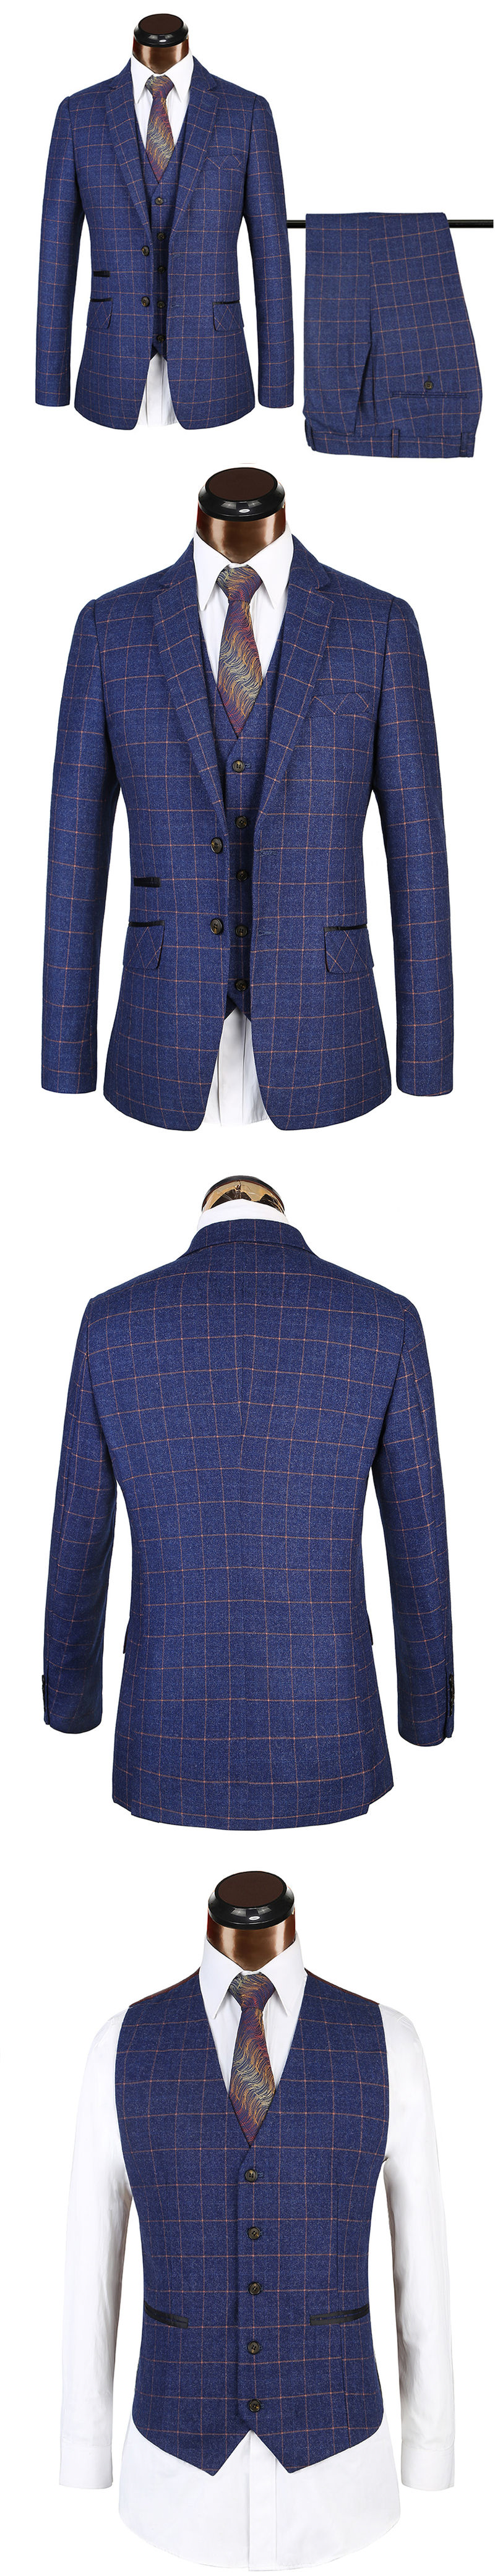 Anzüge Männer Mode Hohe Qualität Plaid Lager Royal Blau